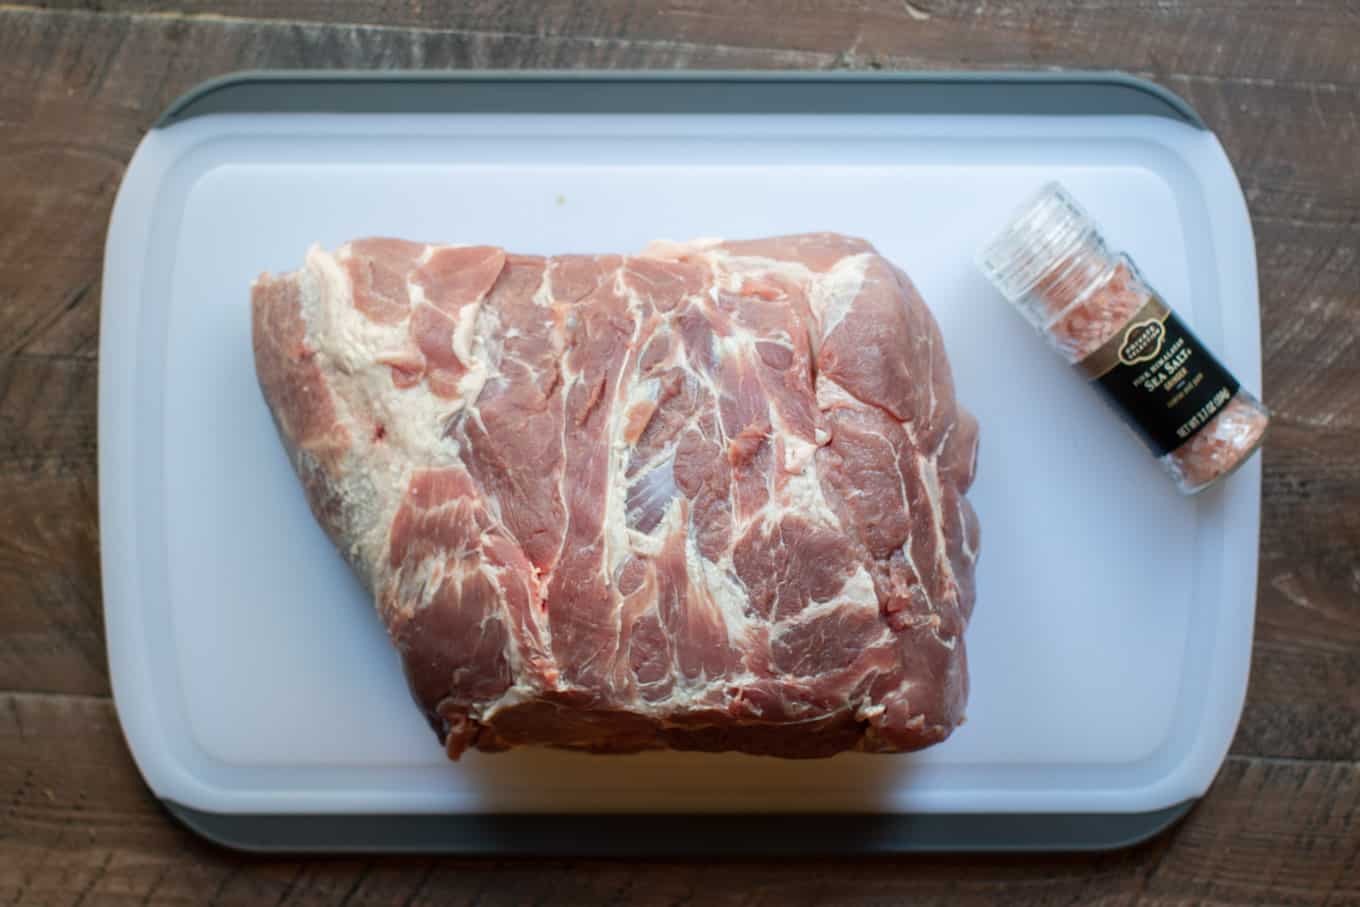 Pork roast unwrapped on a cutting board with jar of Himalayan sea salt next to it.